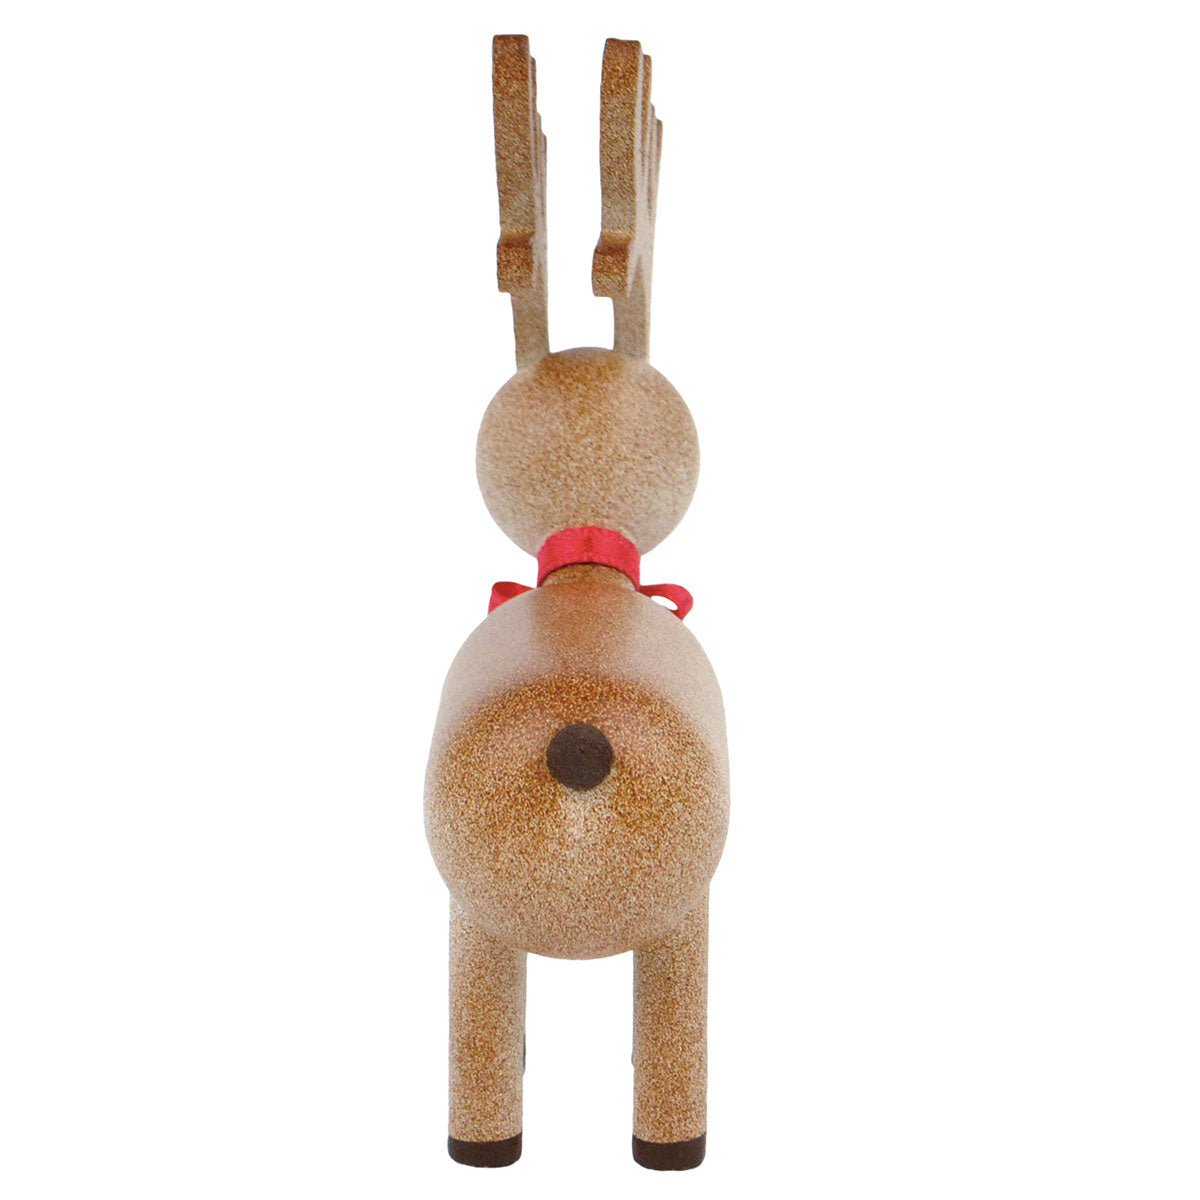 NORDIKA nisse ノルディカ ニッセ クリスマス 木製人形 ( トナカイ / ブラウン / ベル )